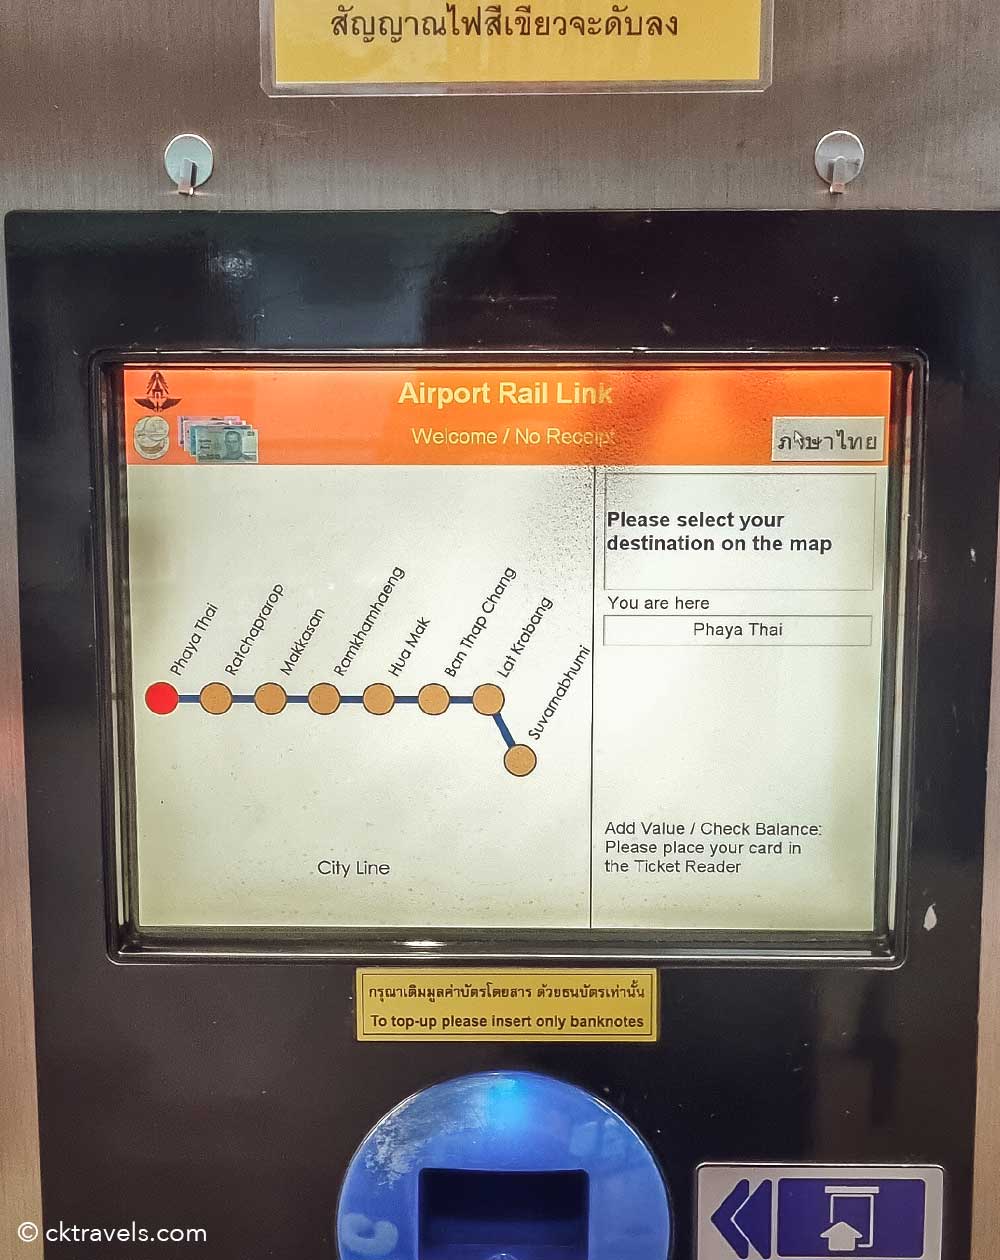 Bangkok Airport Rail Link train ticket machine at Bangkok Suvarnabhumi Airport